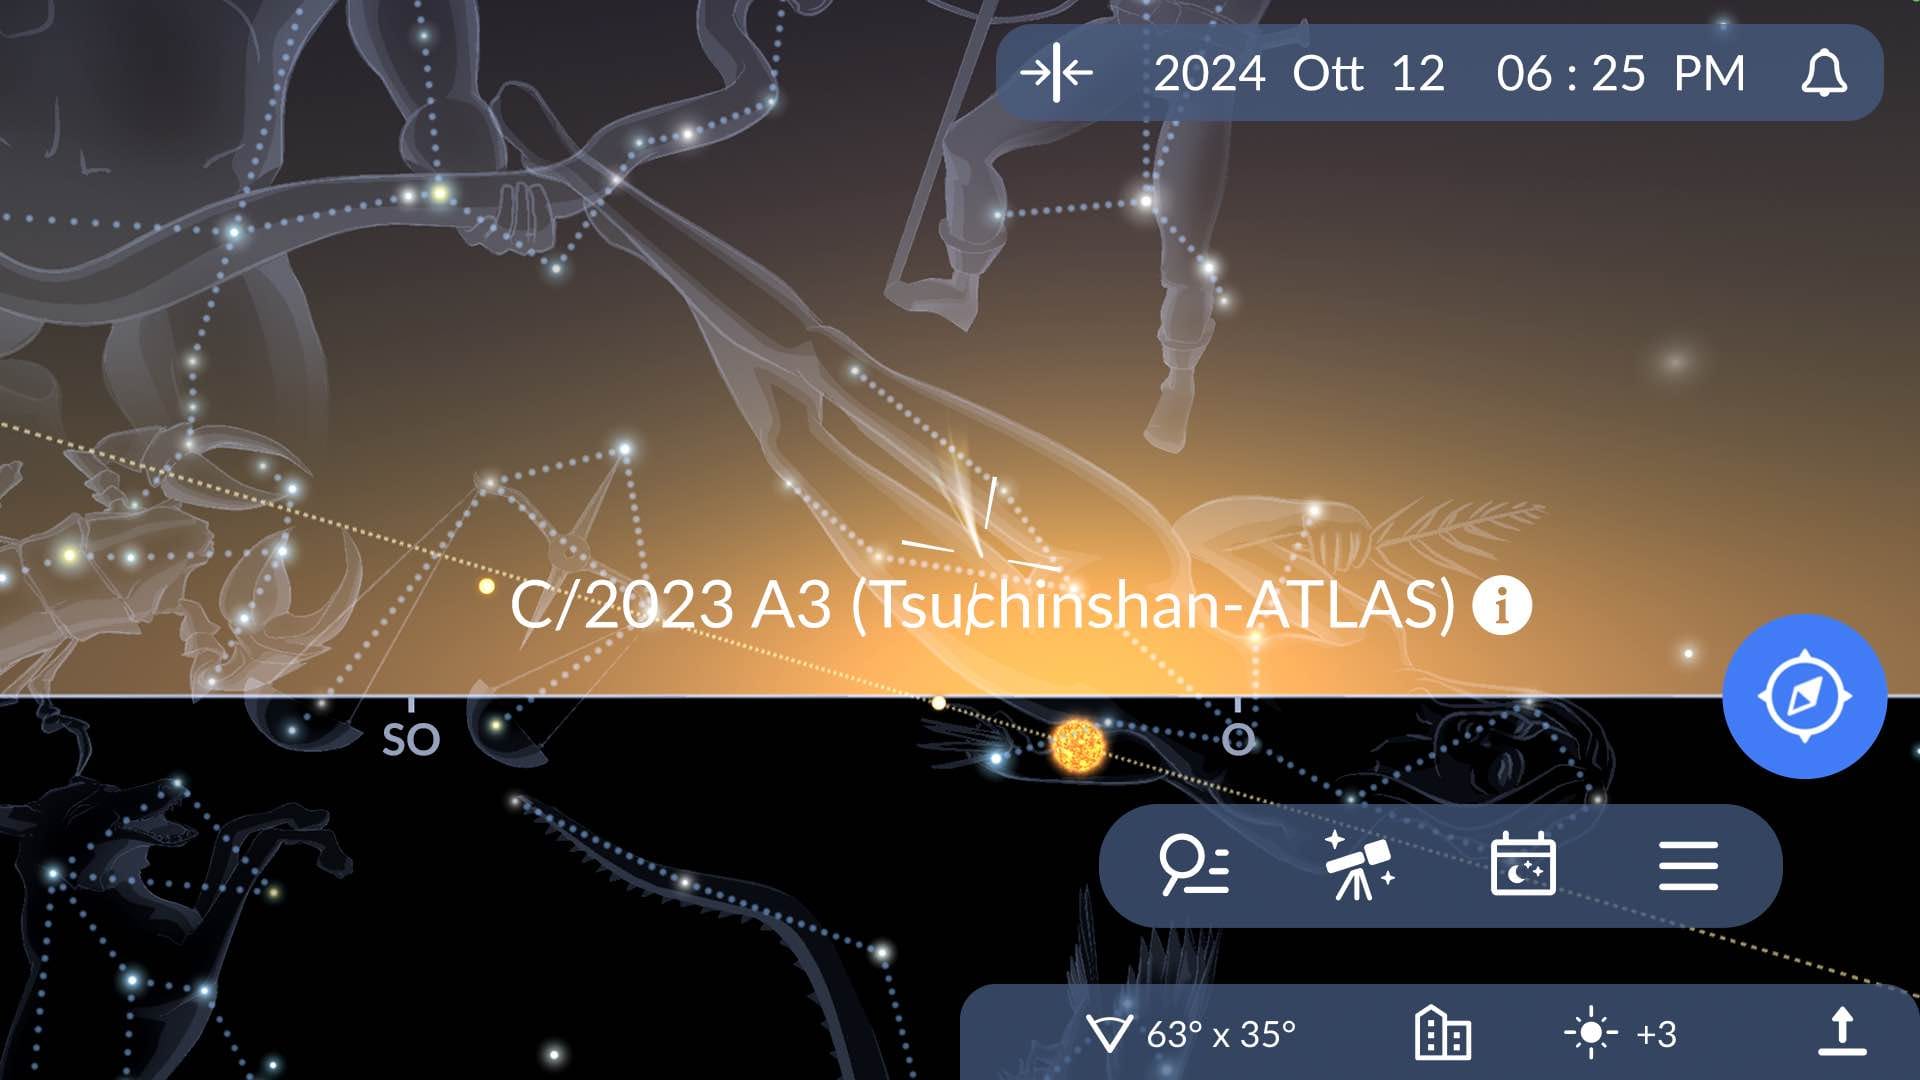 C/2023 A3 (Tsuchinshan-ATLAS) via Sky Tonight app.